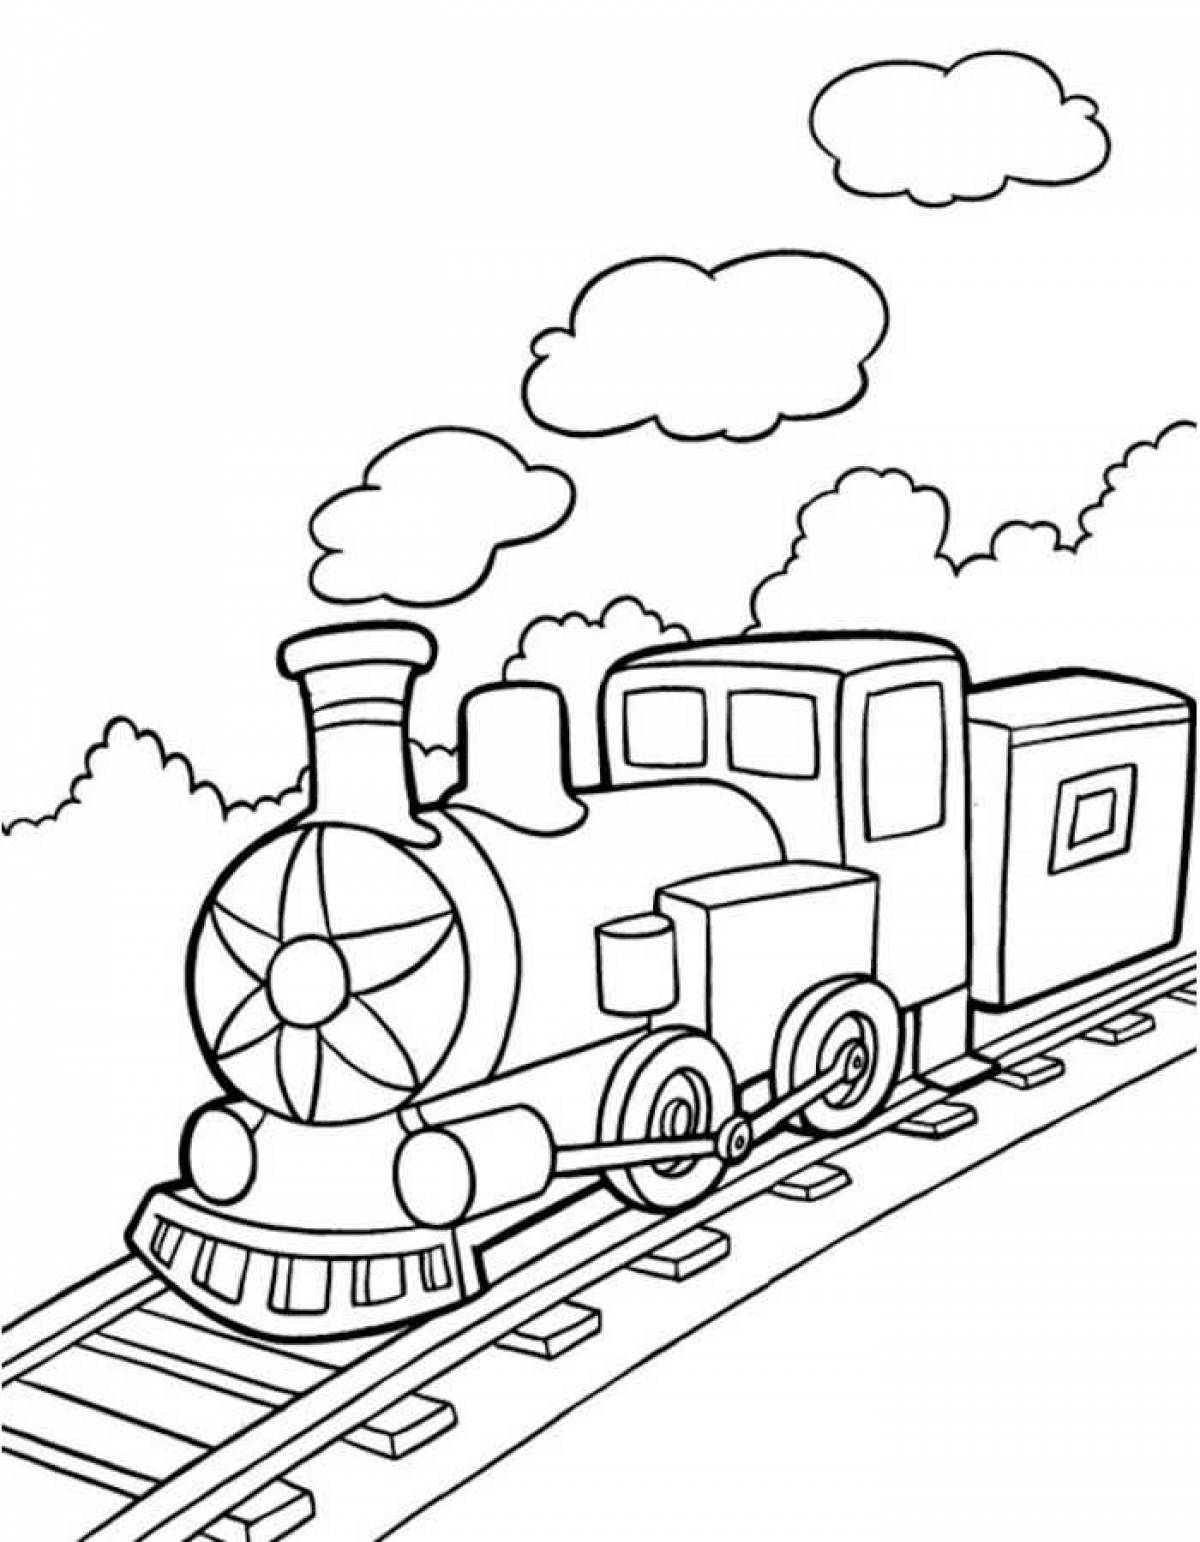 Steam locomotive on the way